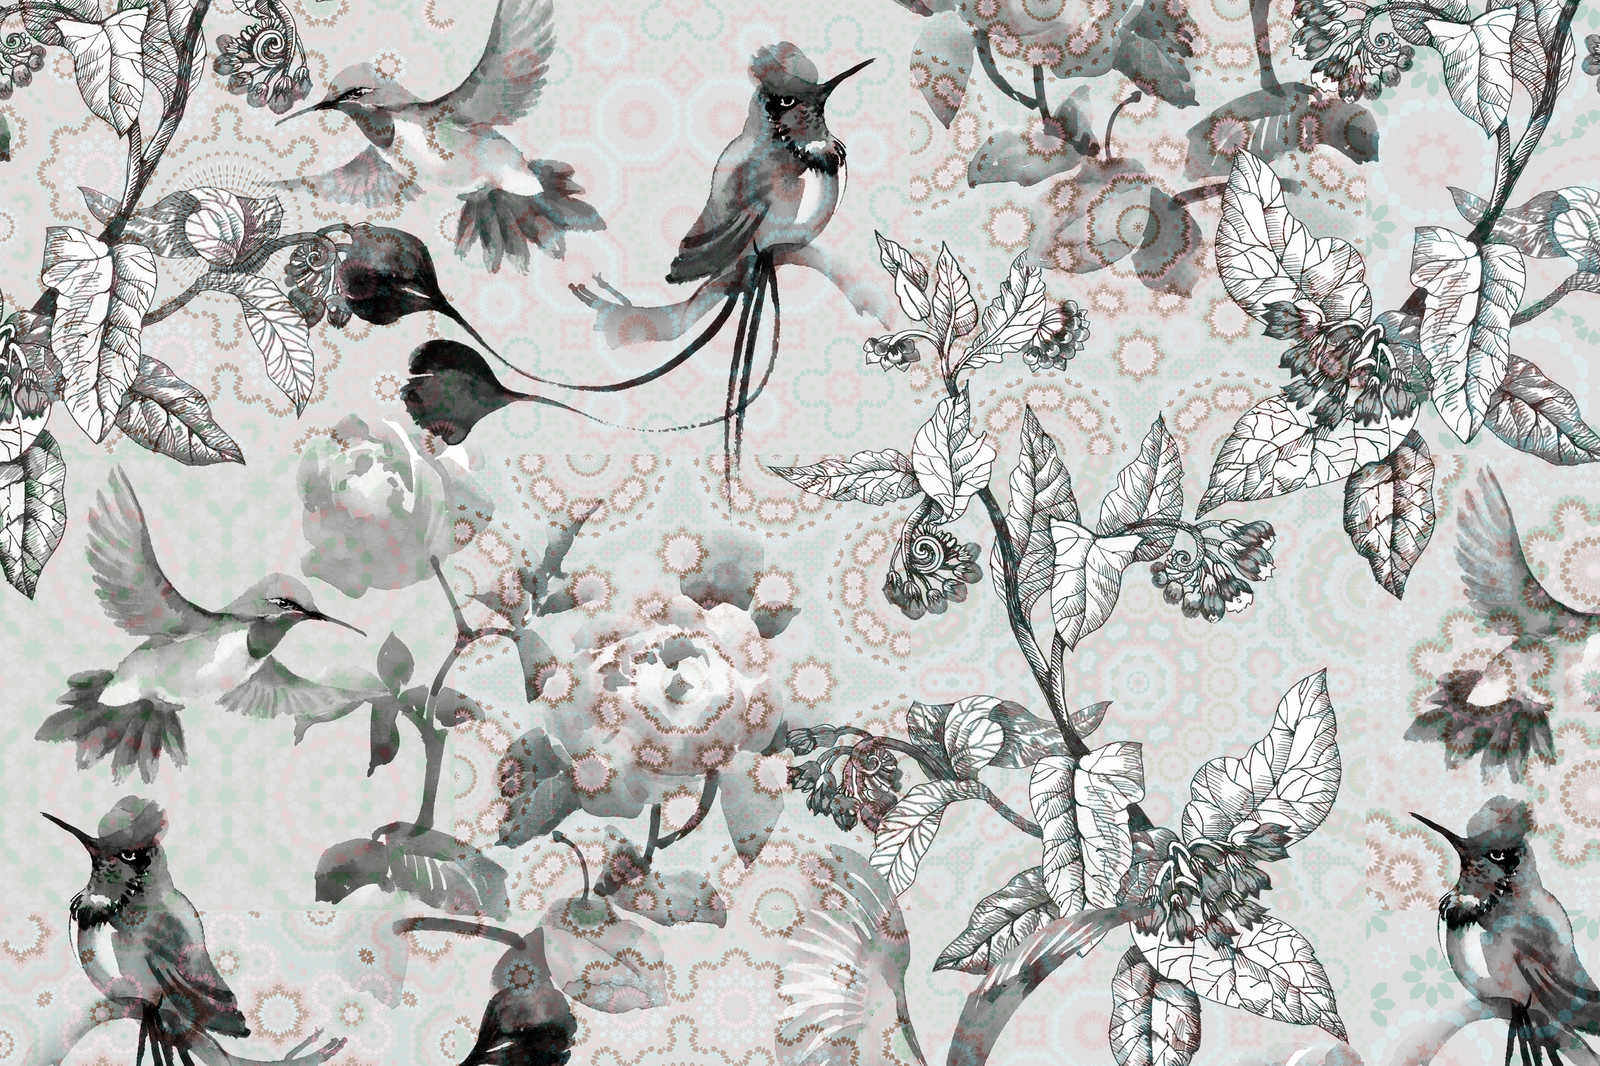             Leinwandbild Natur Design im Collage Stil | exotic mosaic 4 – 0,90 m x 0,60 m
        